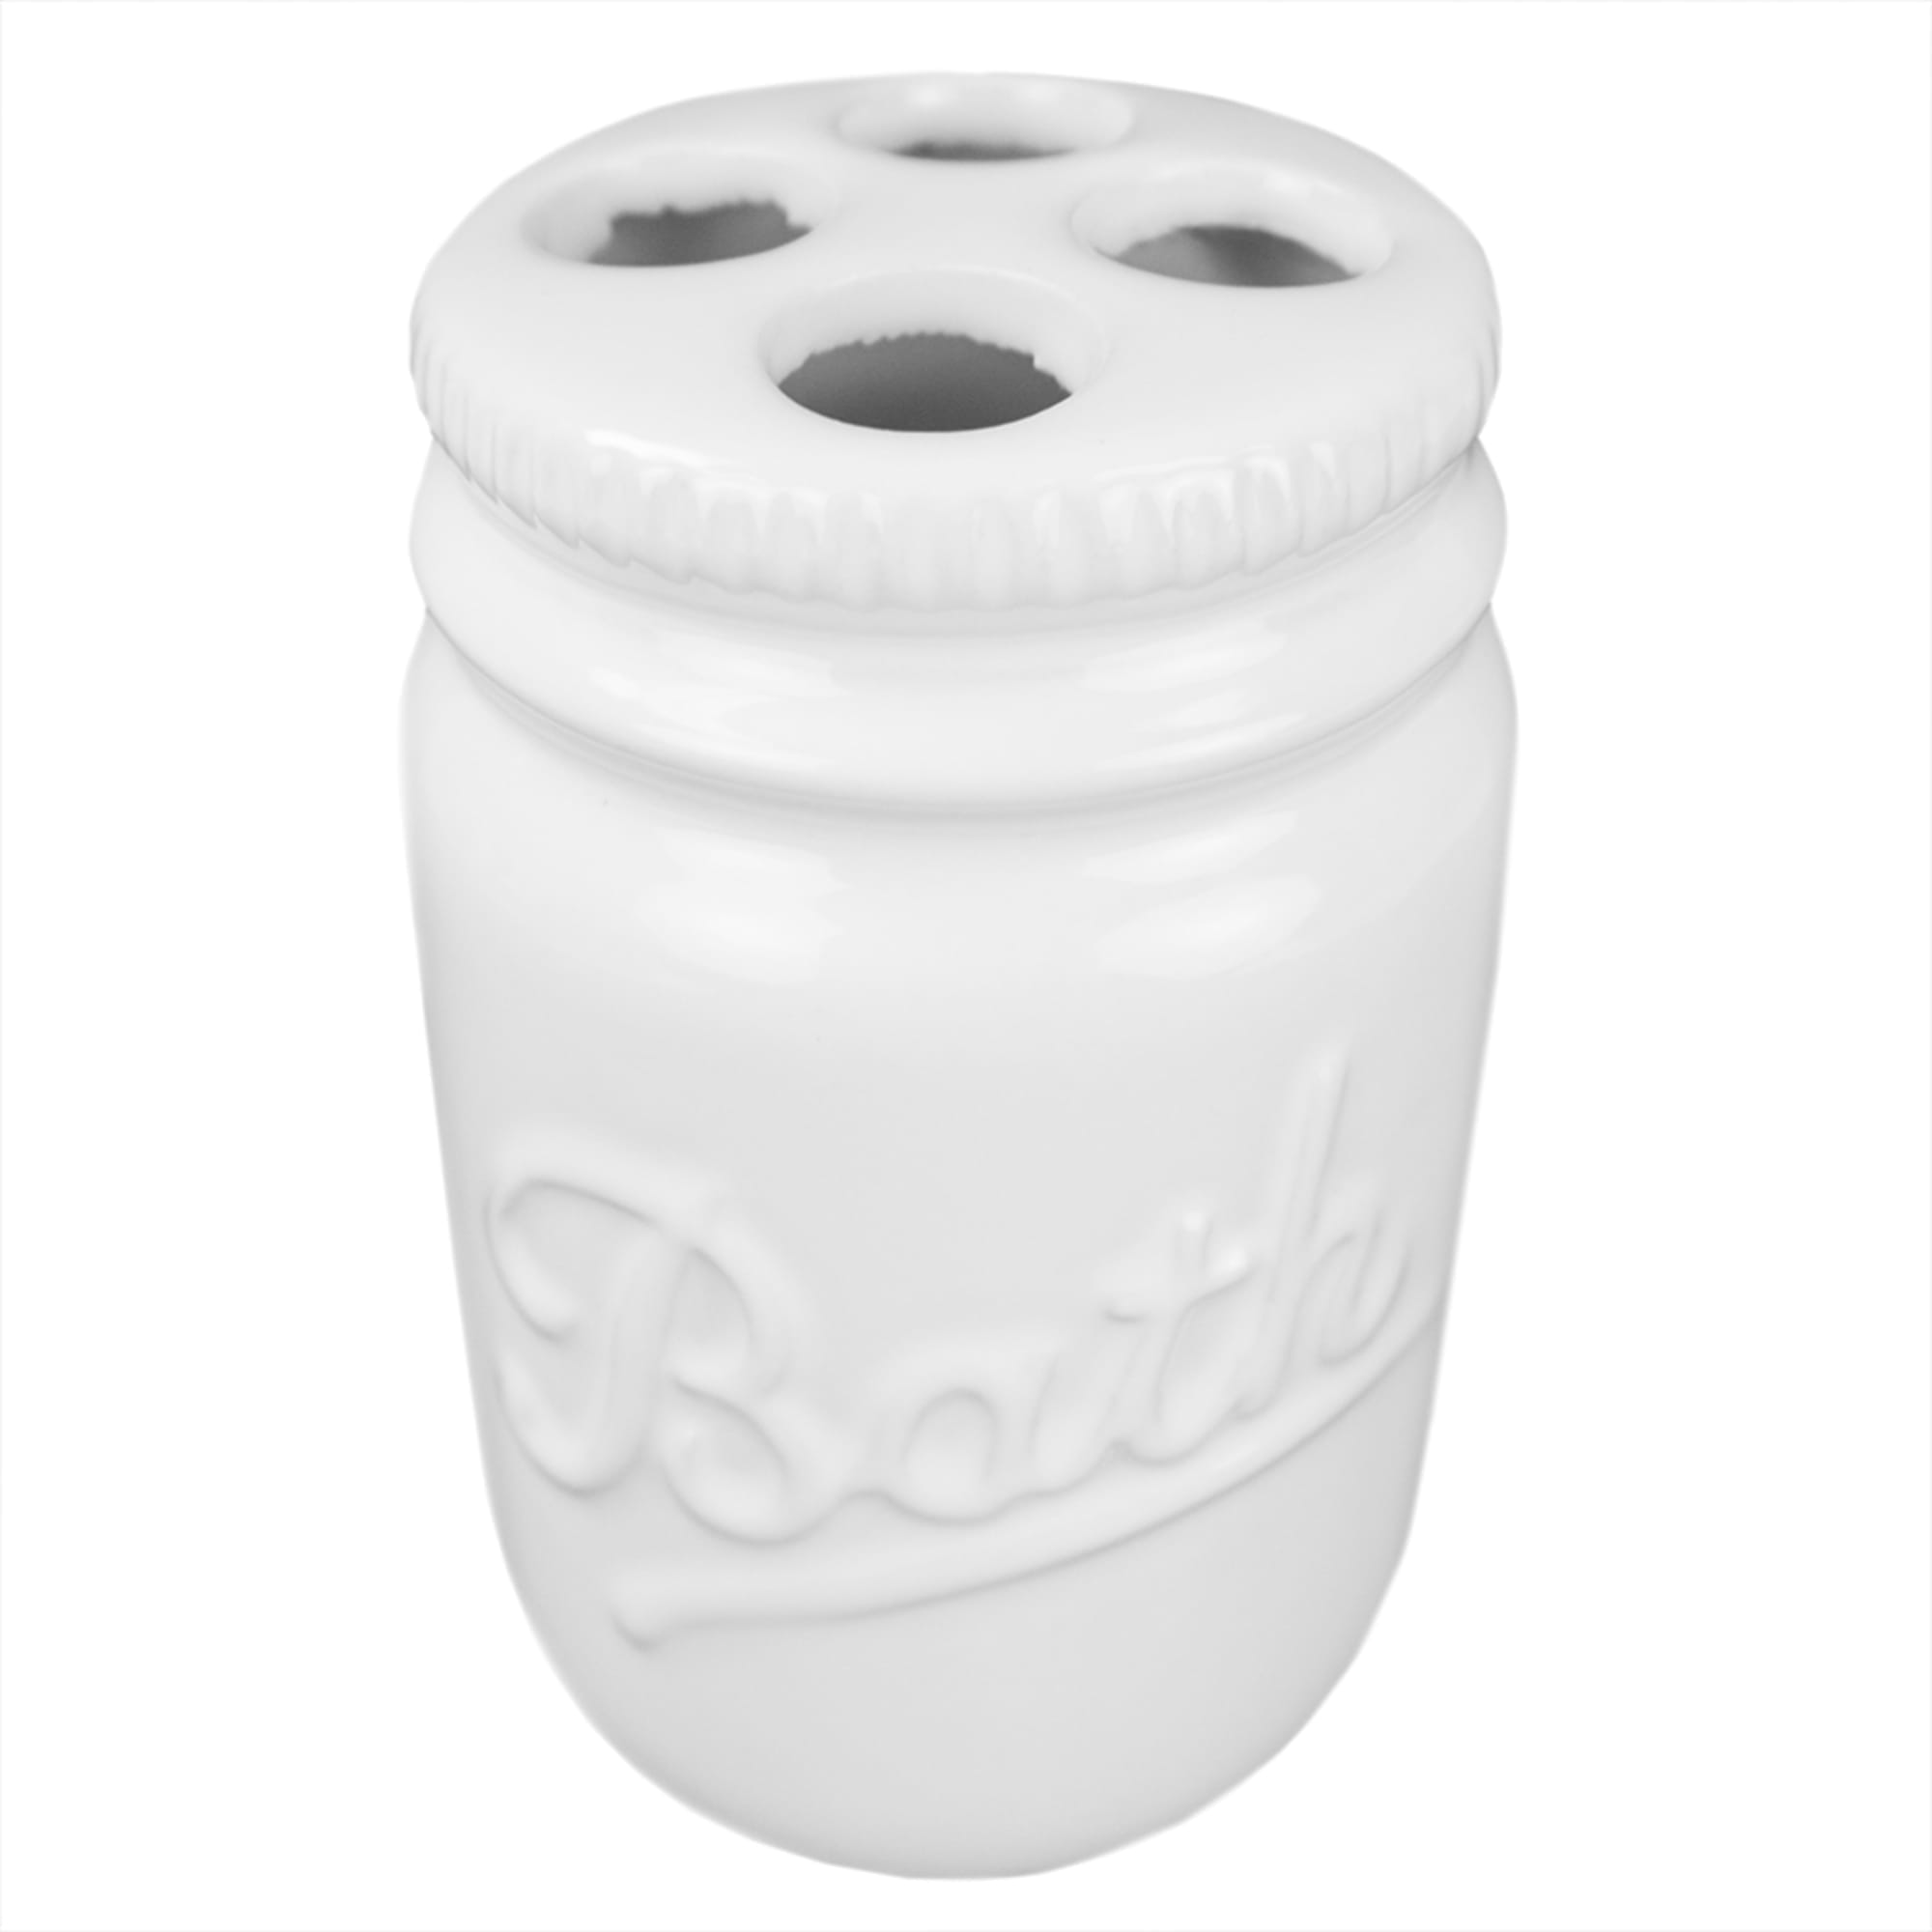 Home Basics 4 Piece Ceramic Mason Jar Bath Set, White $10.00 EACH, CASE PACK OF 6